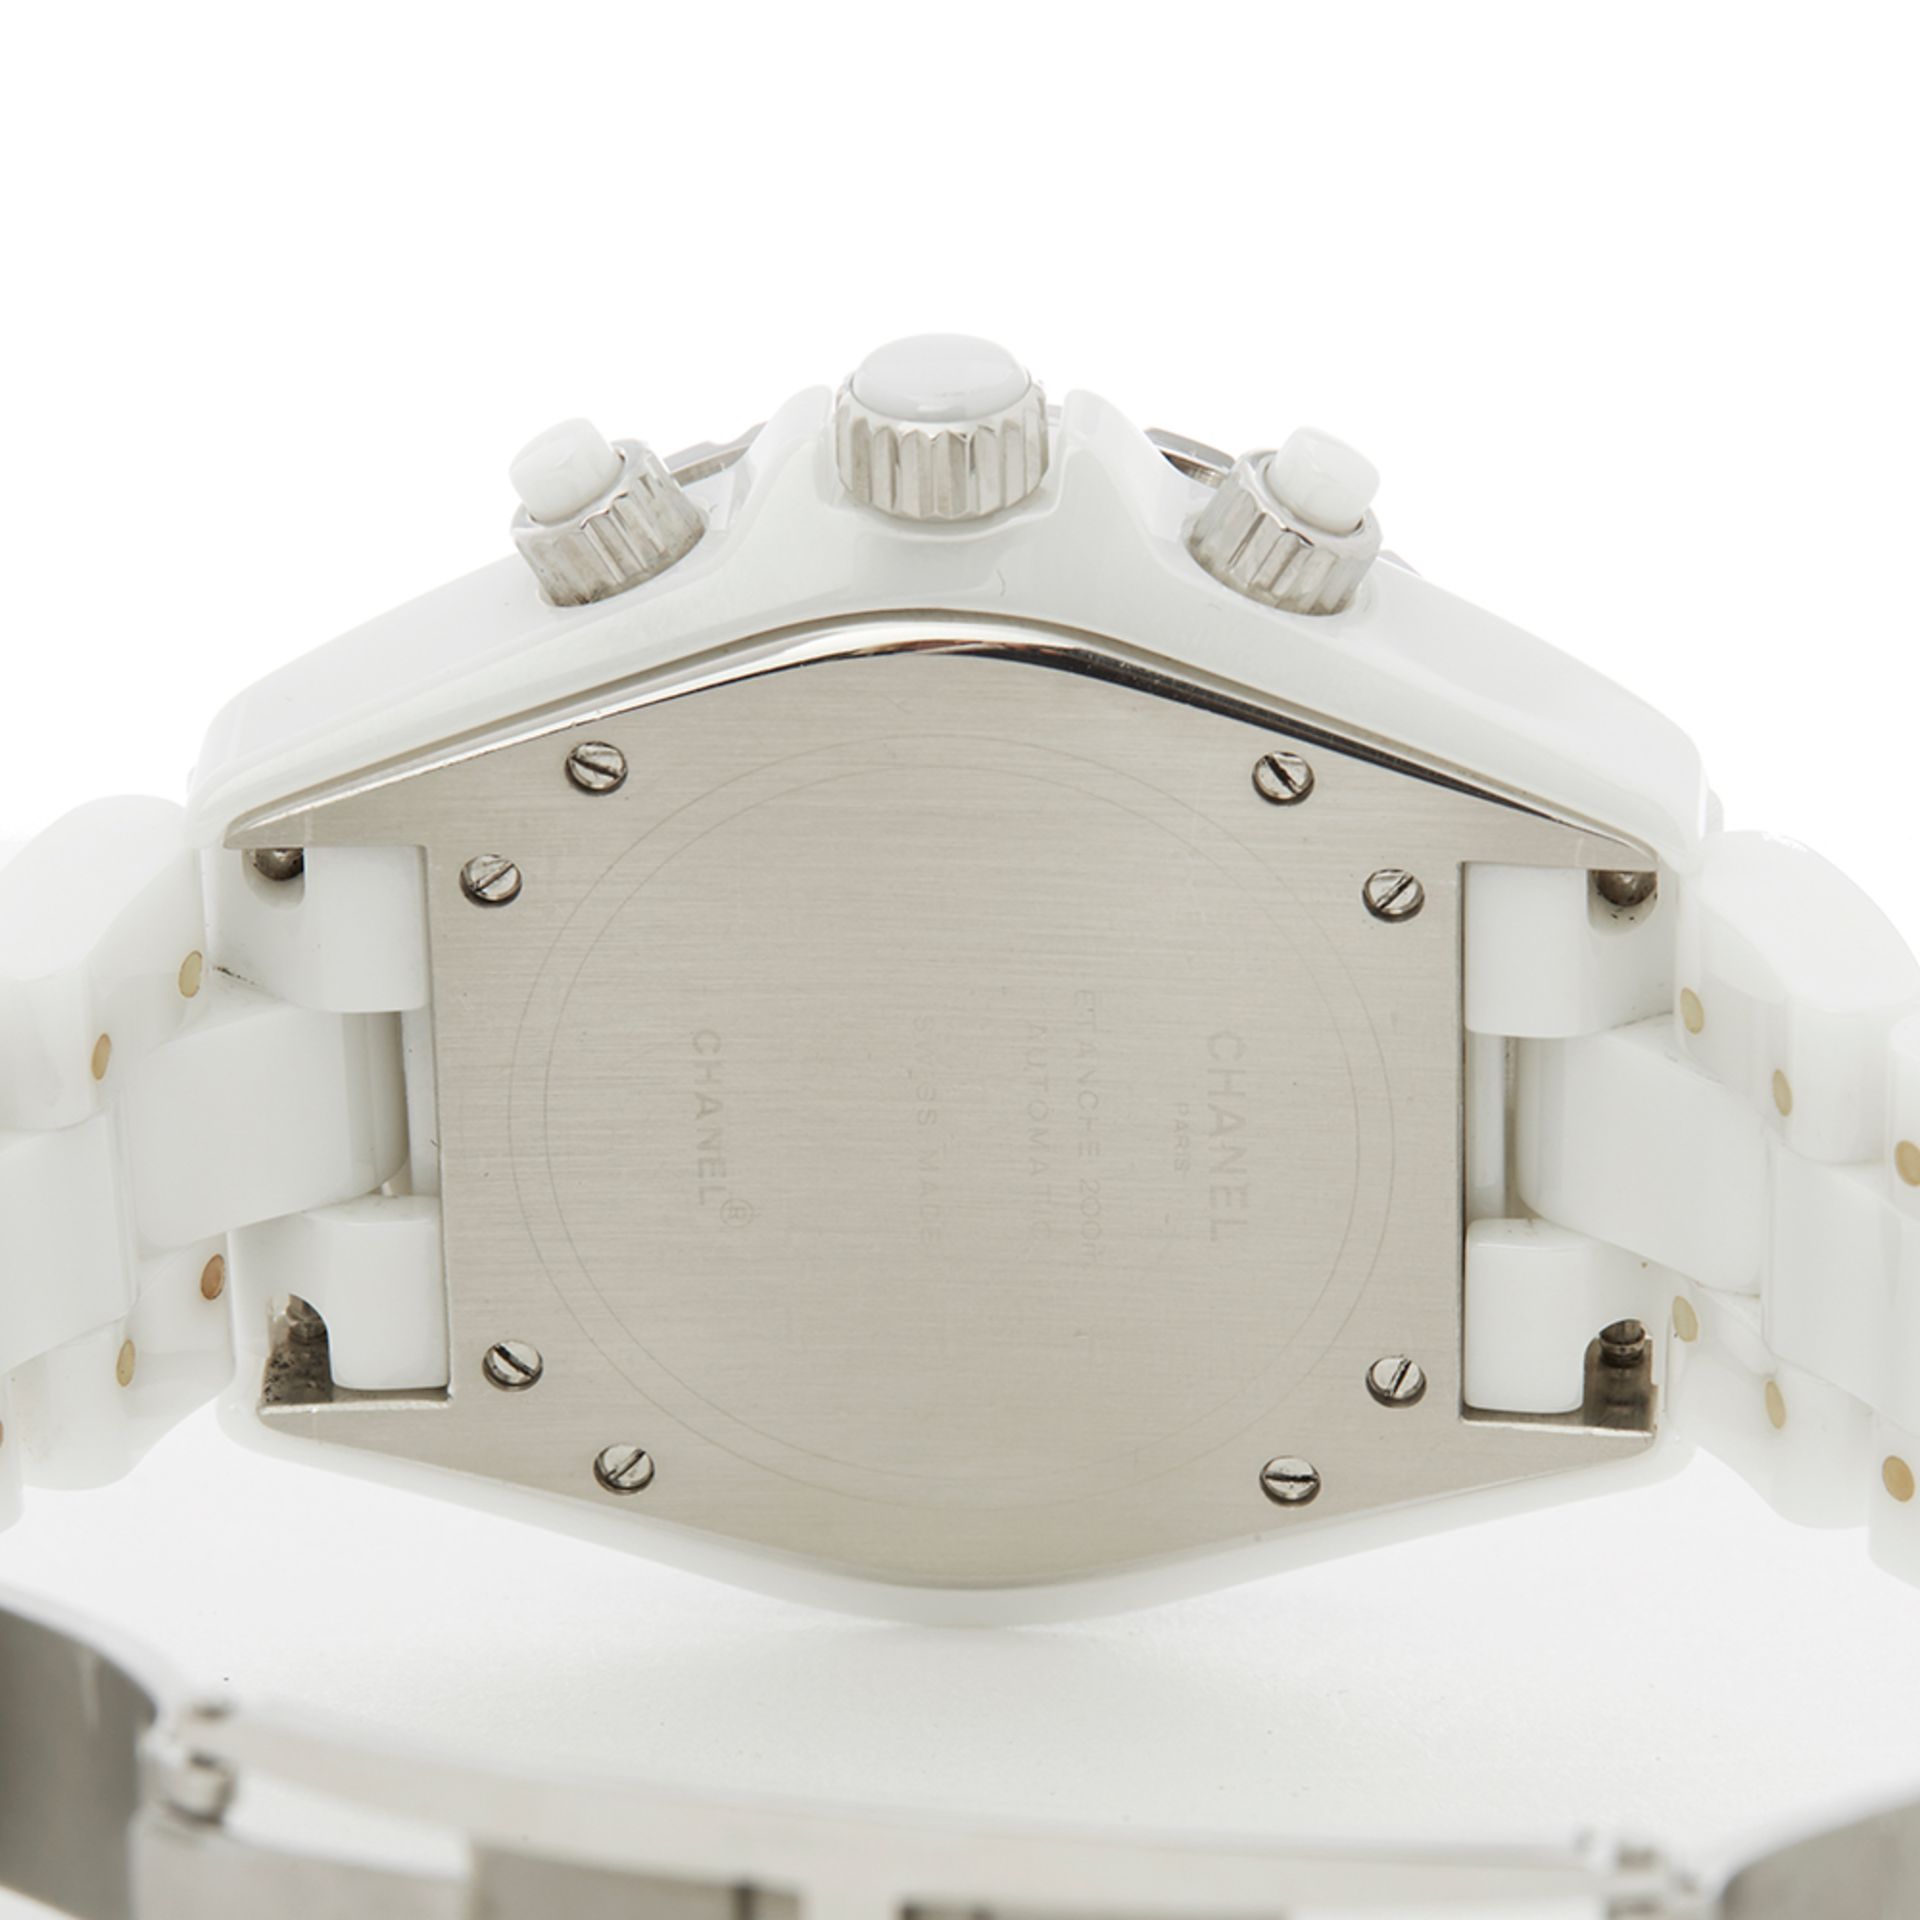 Chanel J12 Diamond Chronograph White Ceramic - H1007 - Image 7 of 8